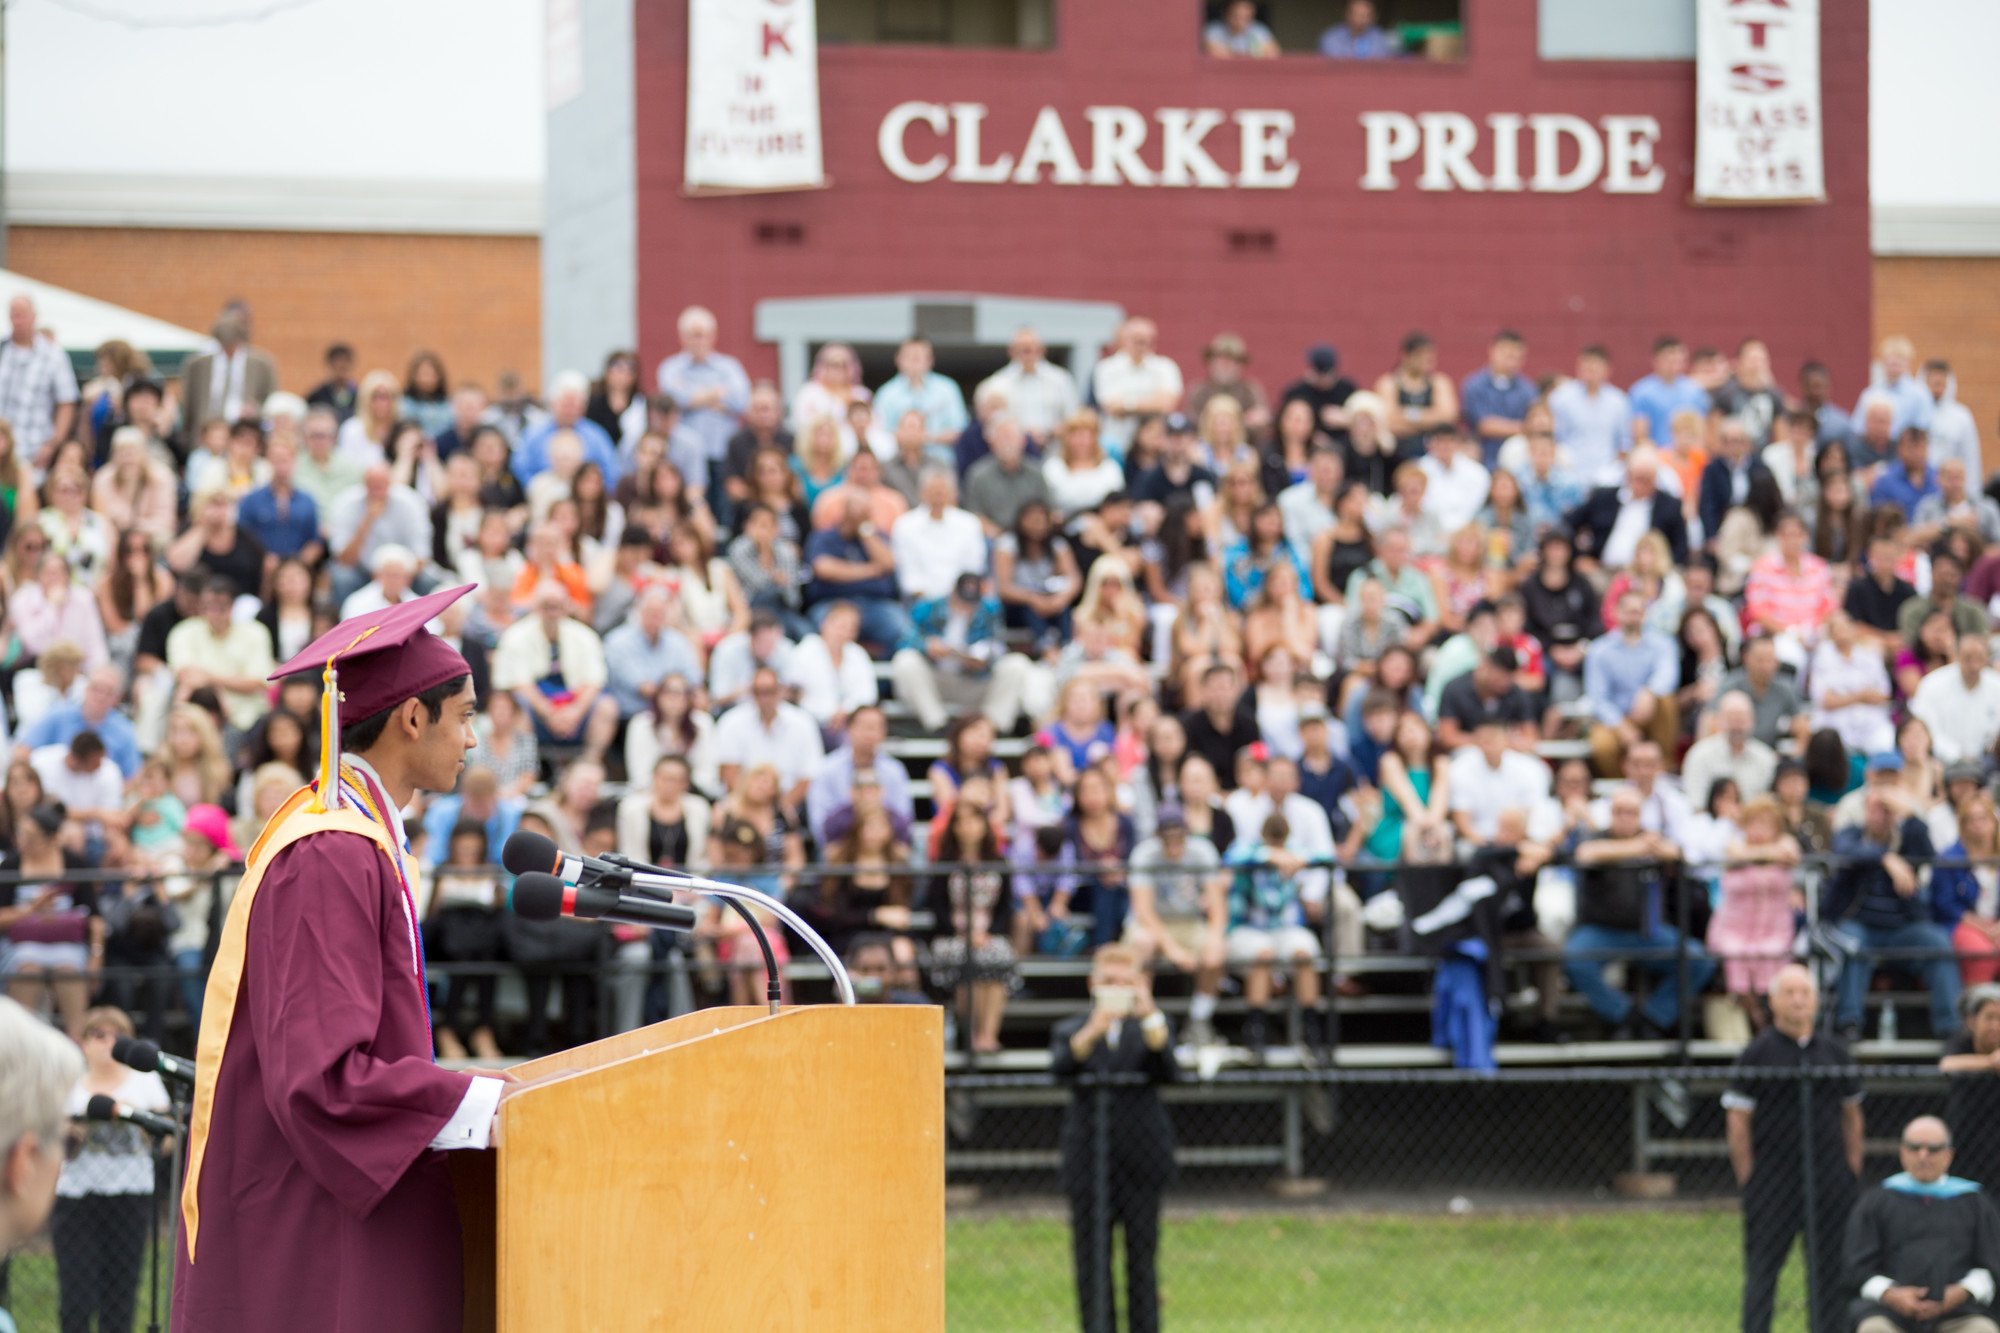 At graduation ceremonies held last Sunday, W.T. Clarke valedictorian Pavithran Ravindran addressed his classmates